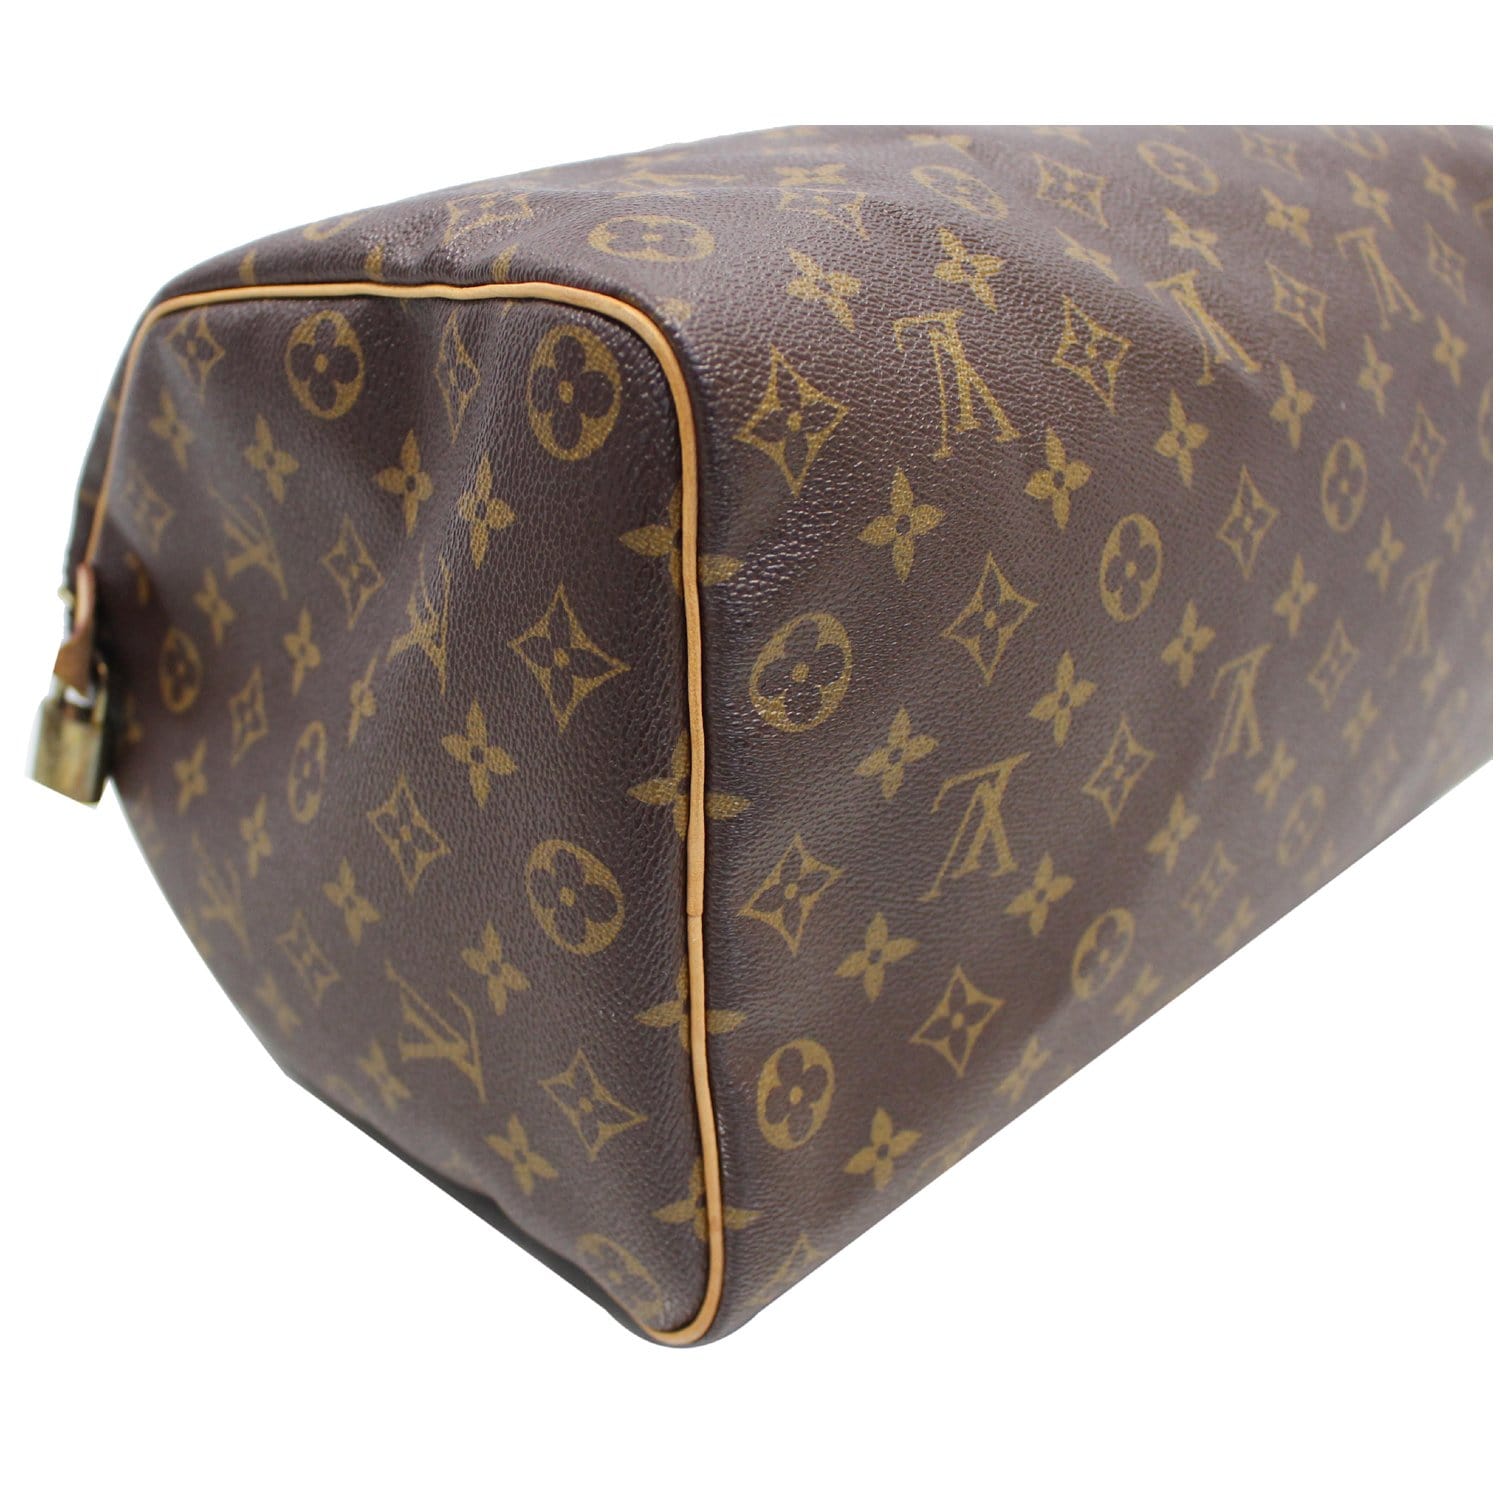 Price: $472 Authentic Louis Vuitton Monogram Speedy 35 Bag Made in